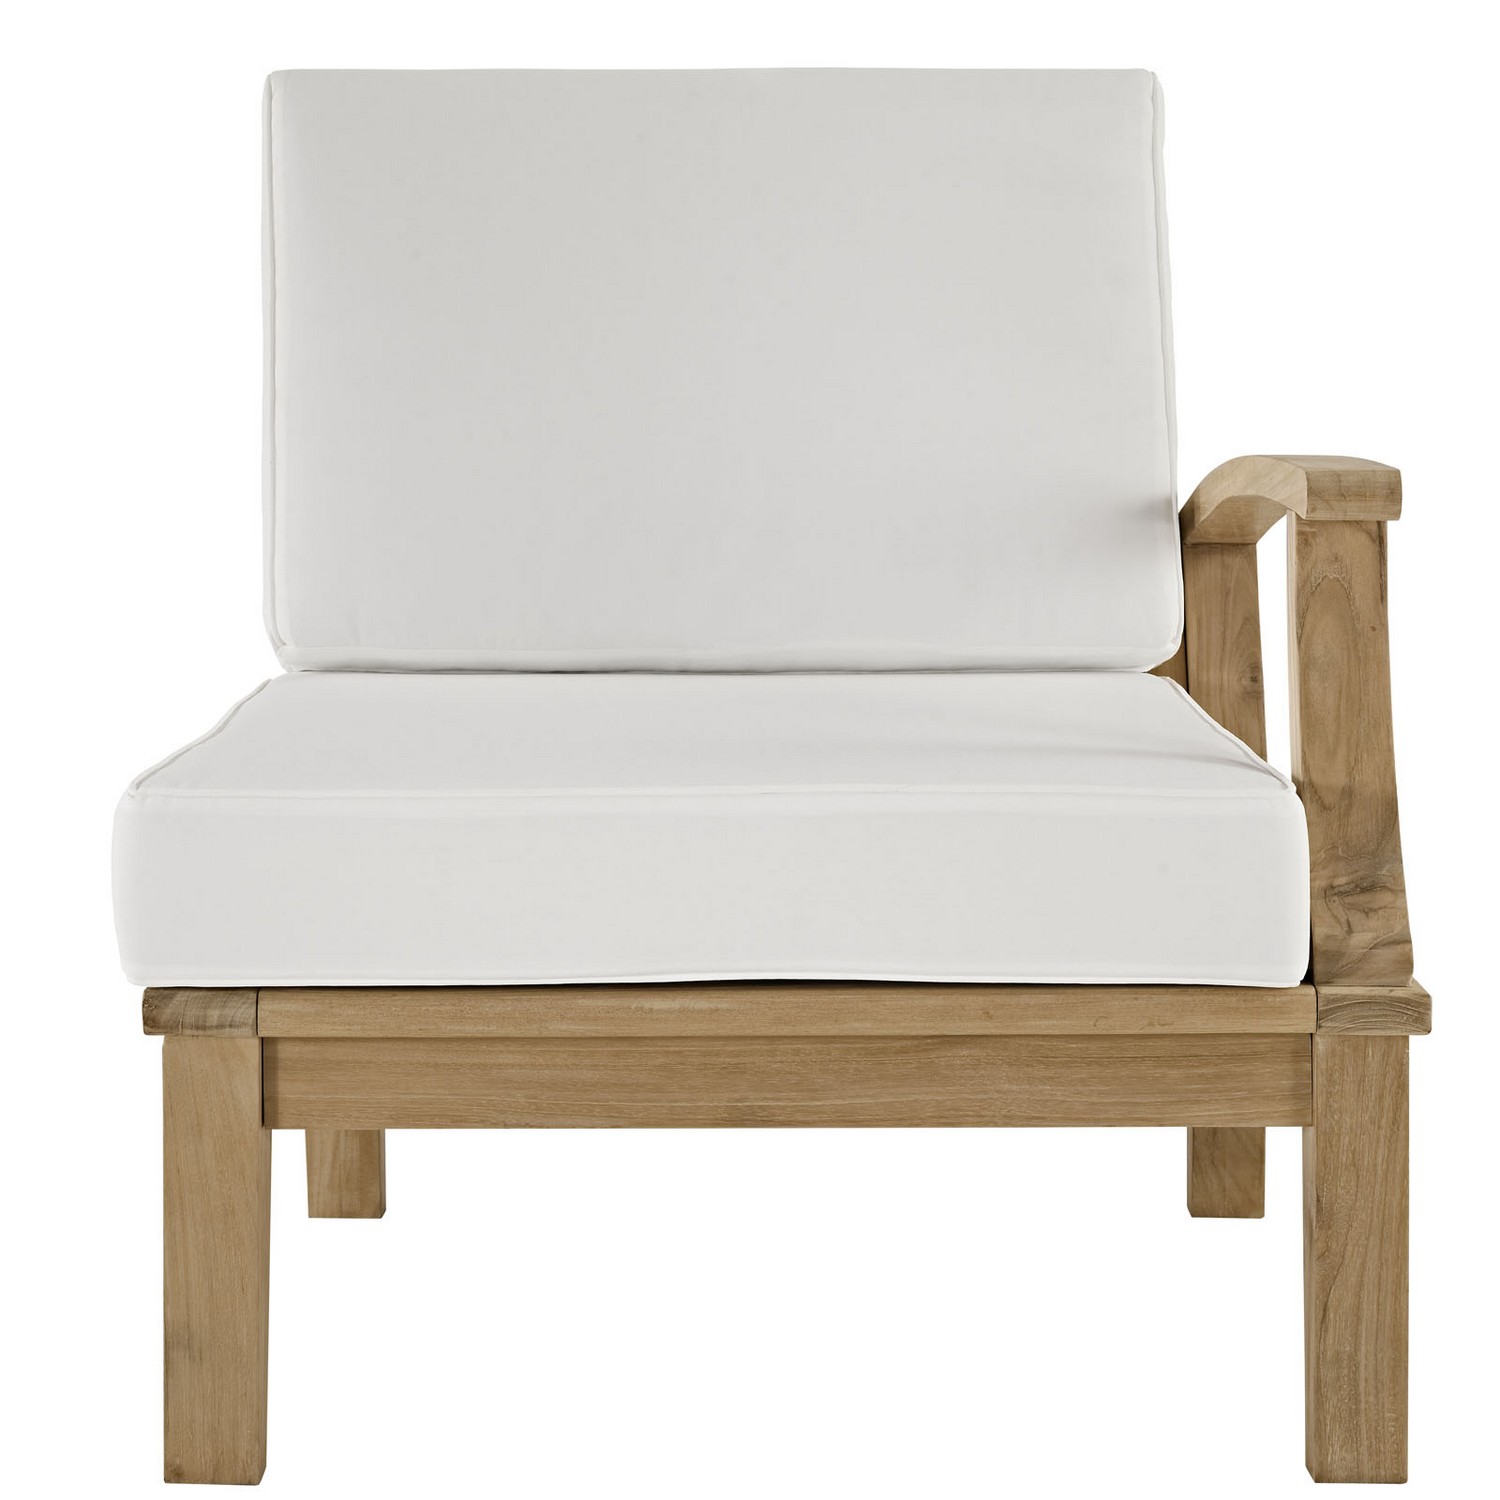 Modway Marina Outdoor Patio Teak Left-Arm Sofa - Natural White